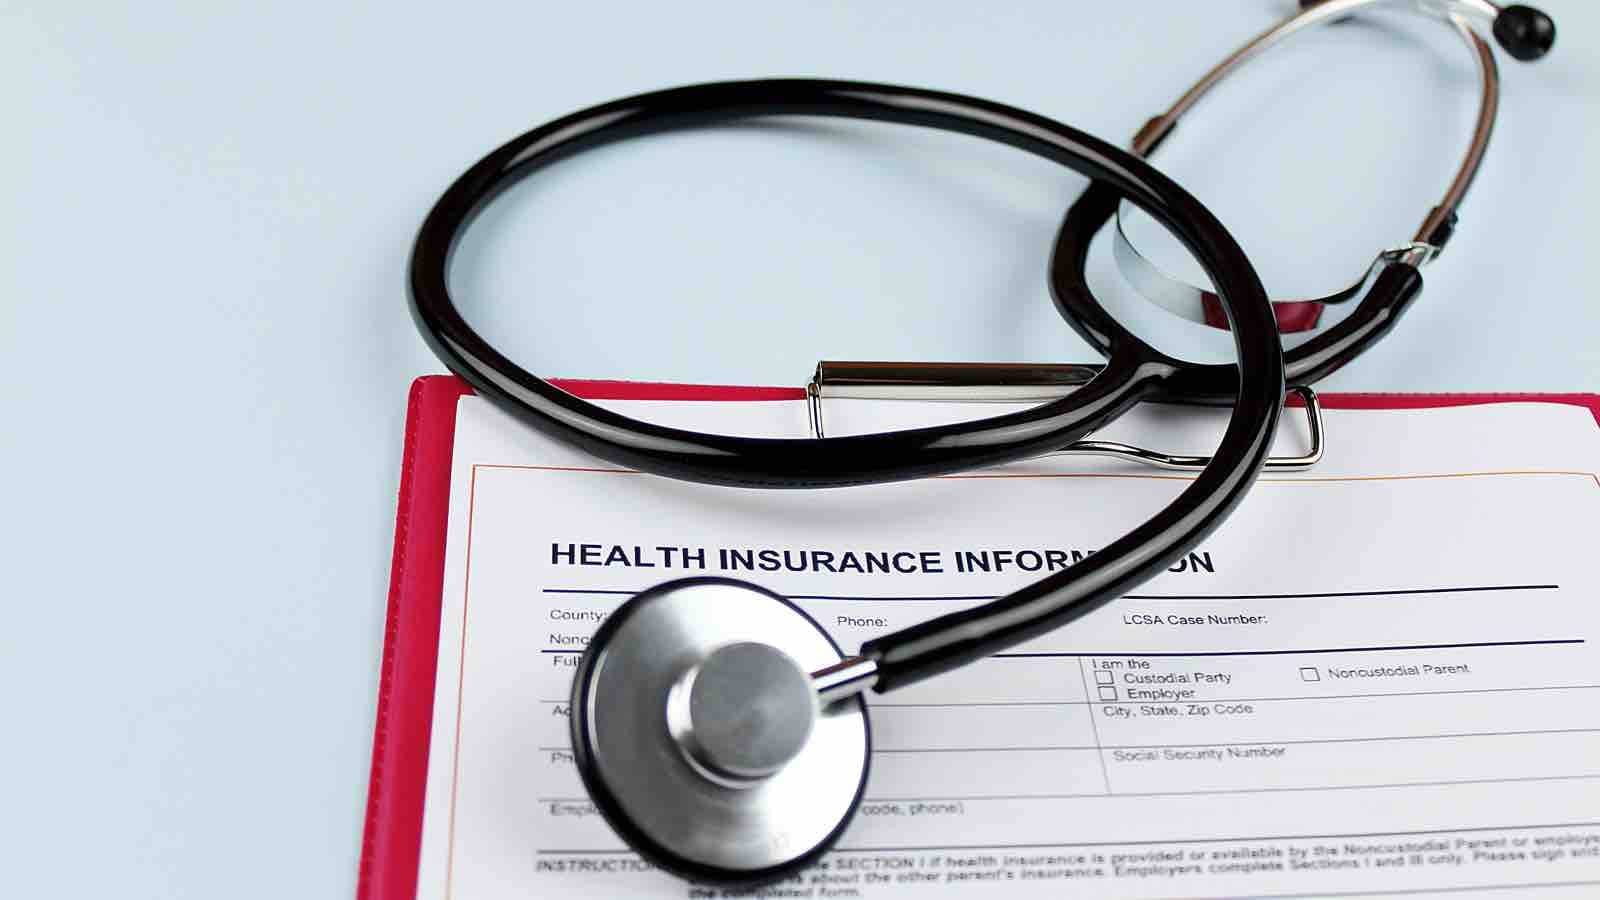 Health-Insurance-Form-Paperwork.jpg